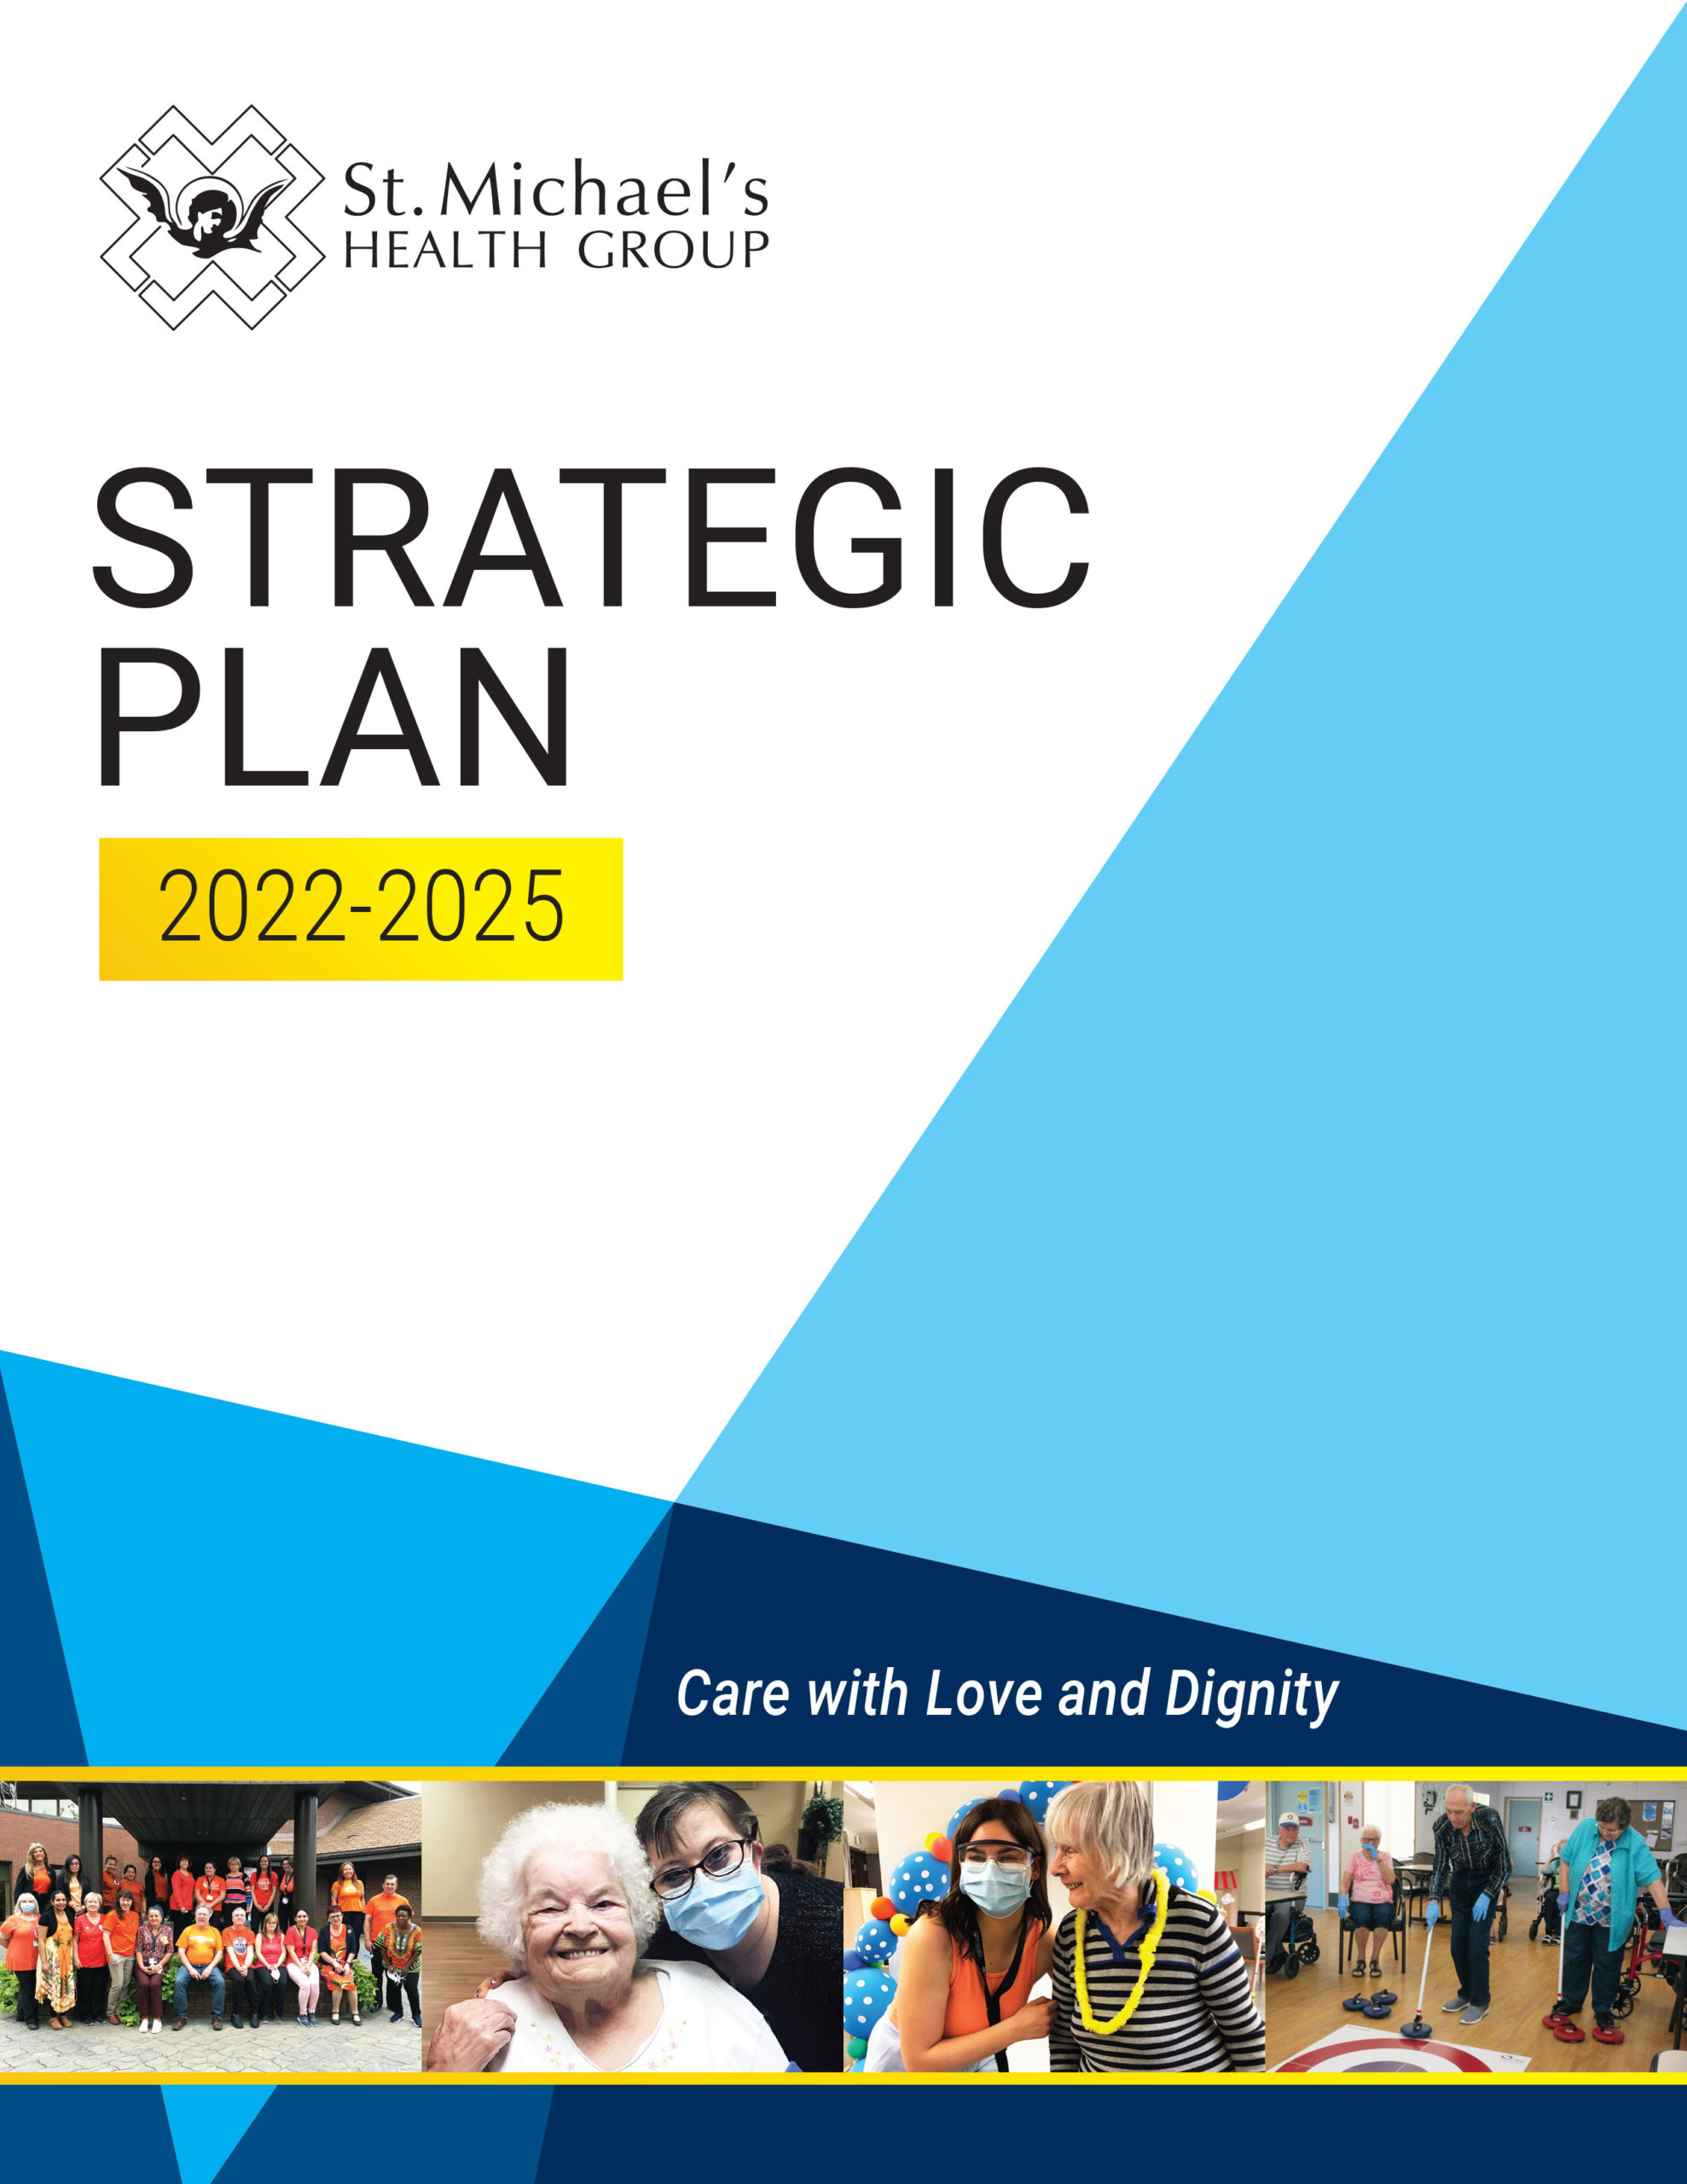 St. Michael's Health Group's Strategic Plan 2022-2025